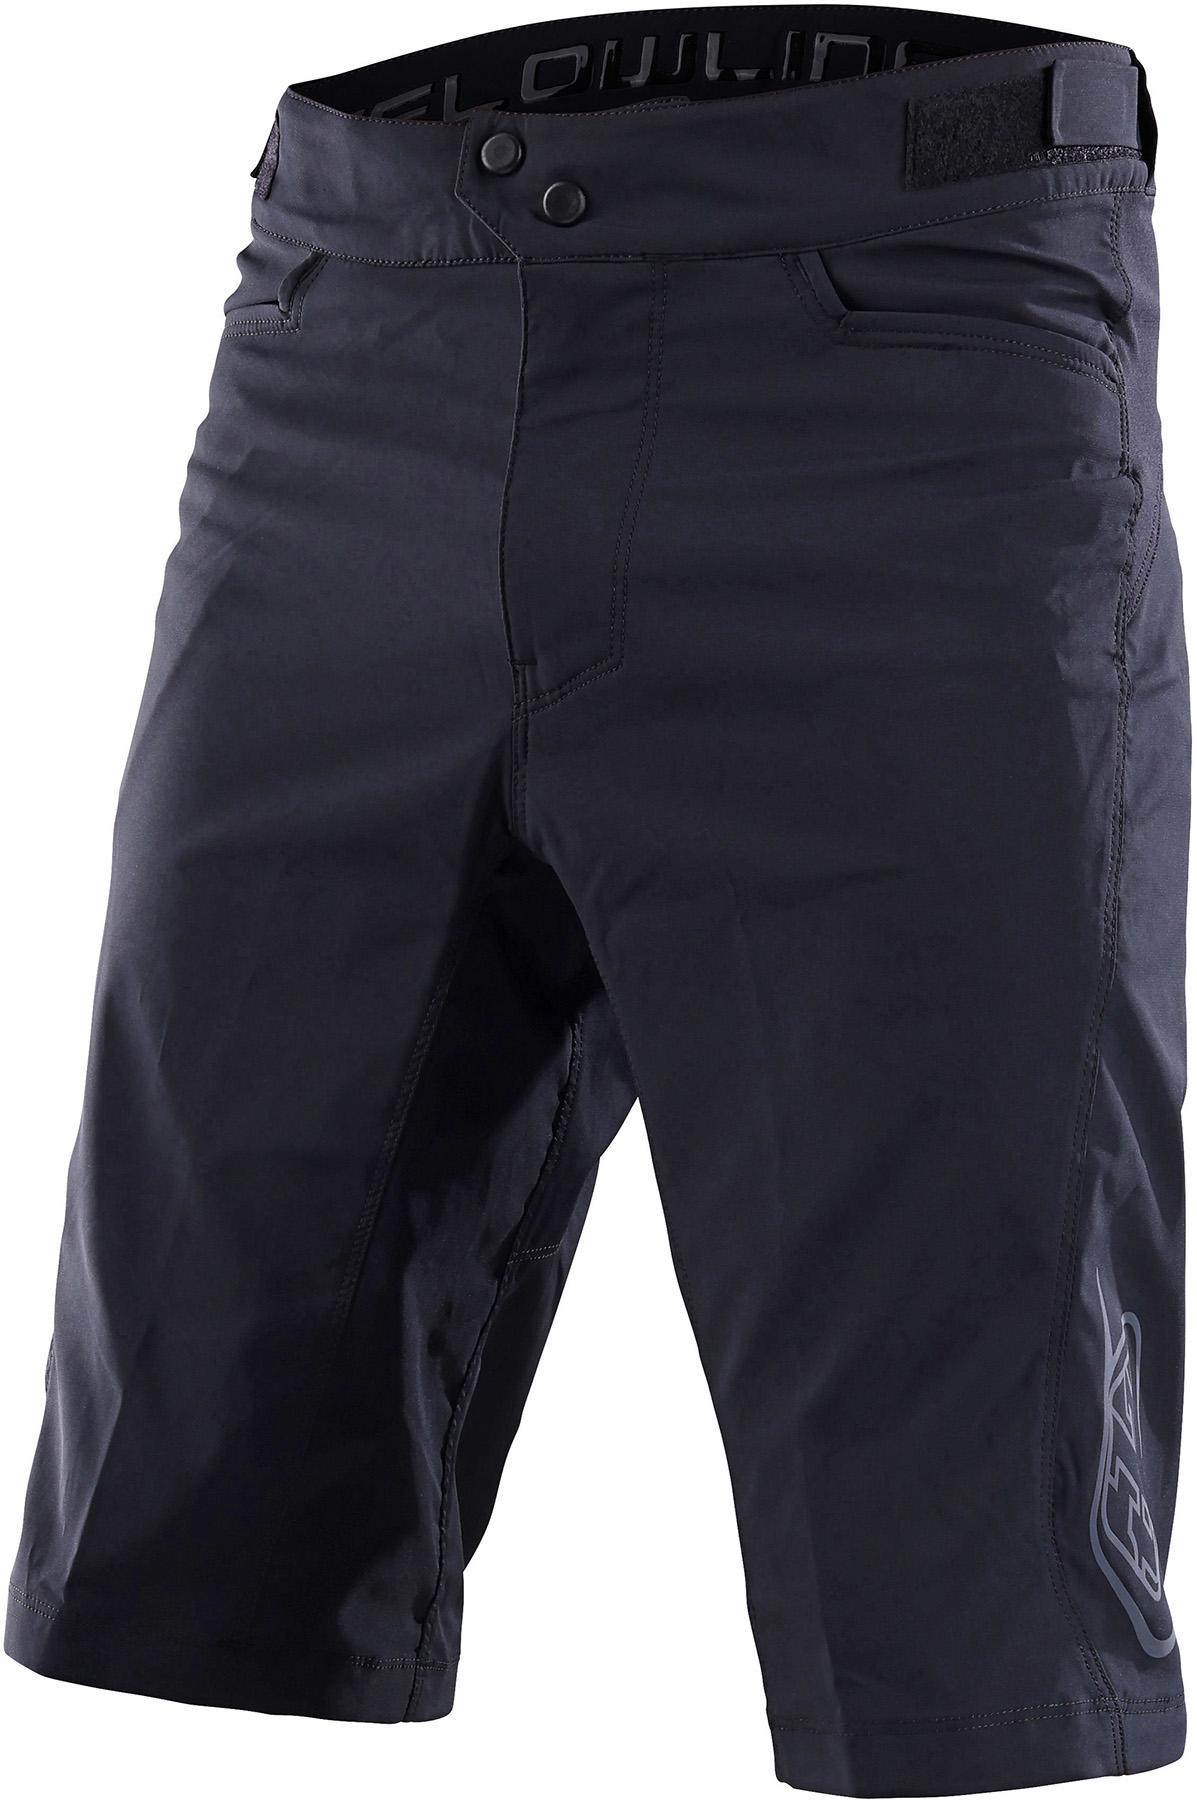 Troy Lee Designs Flowline Shorts - Solid Black